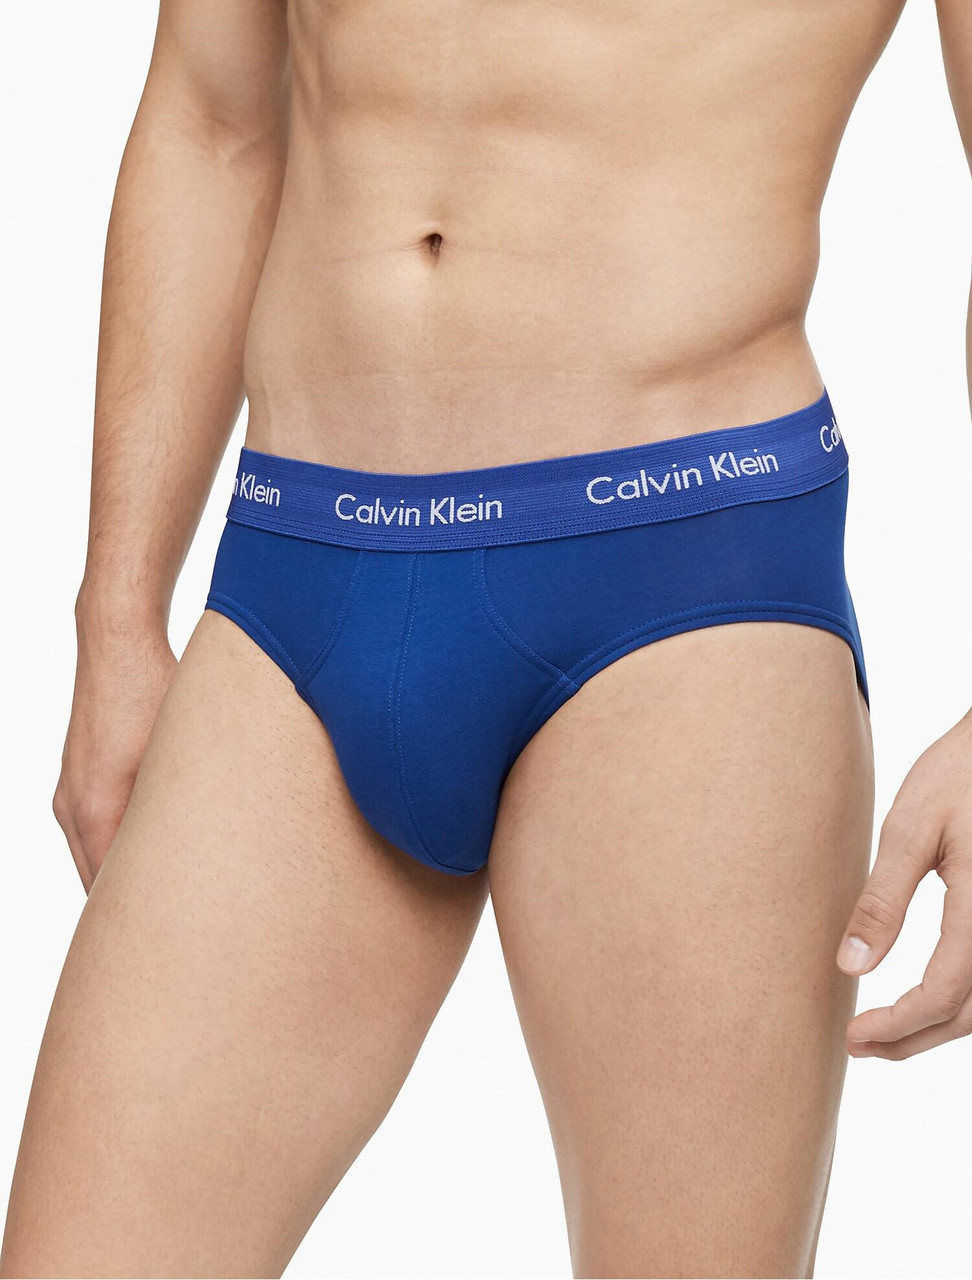 Calvin Klein Cotton Stretch Hip Brief 3-Pack Black/Blue/Cobalt NU2661-062 -  Free Shipping at LASC